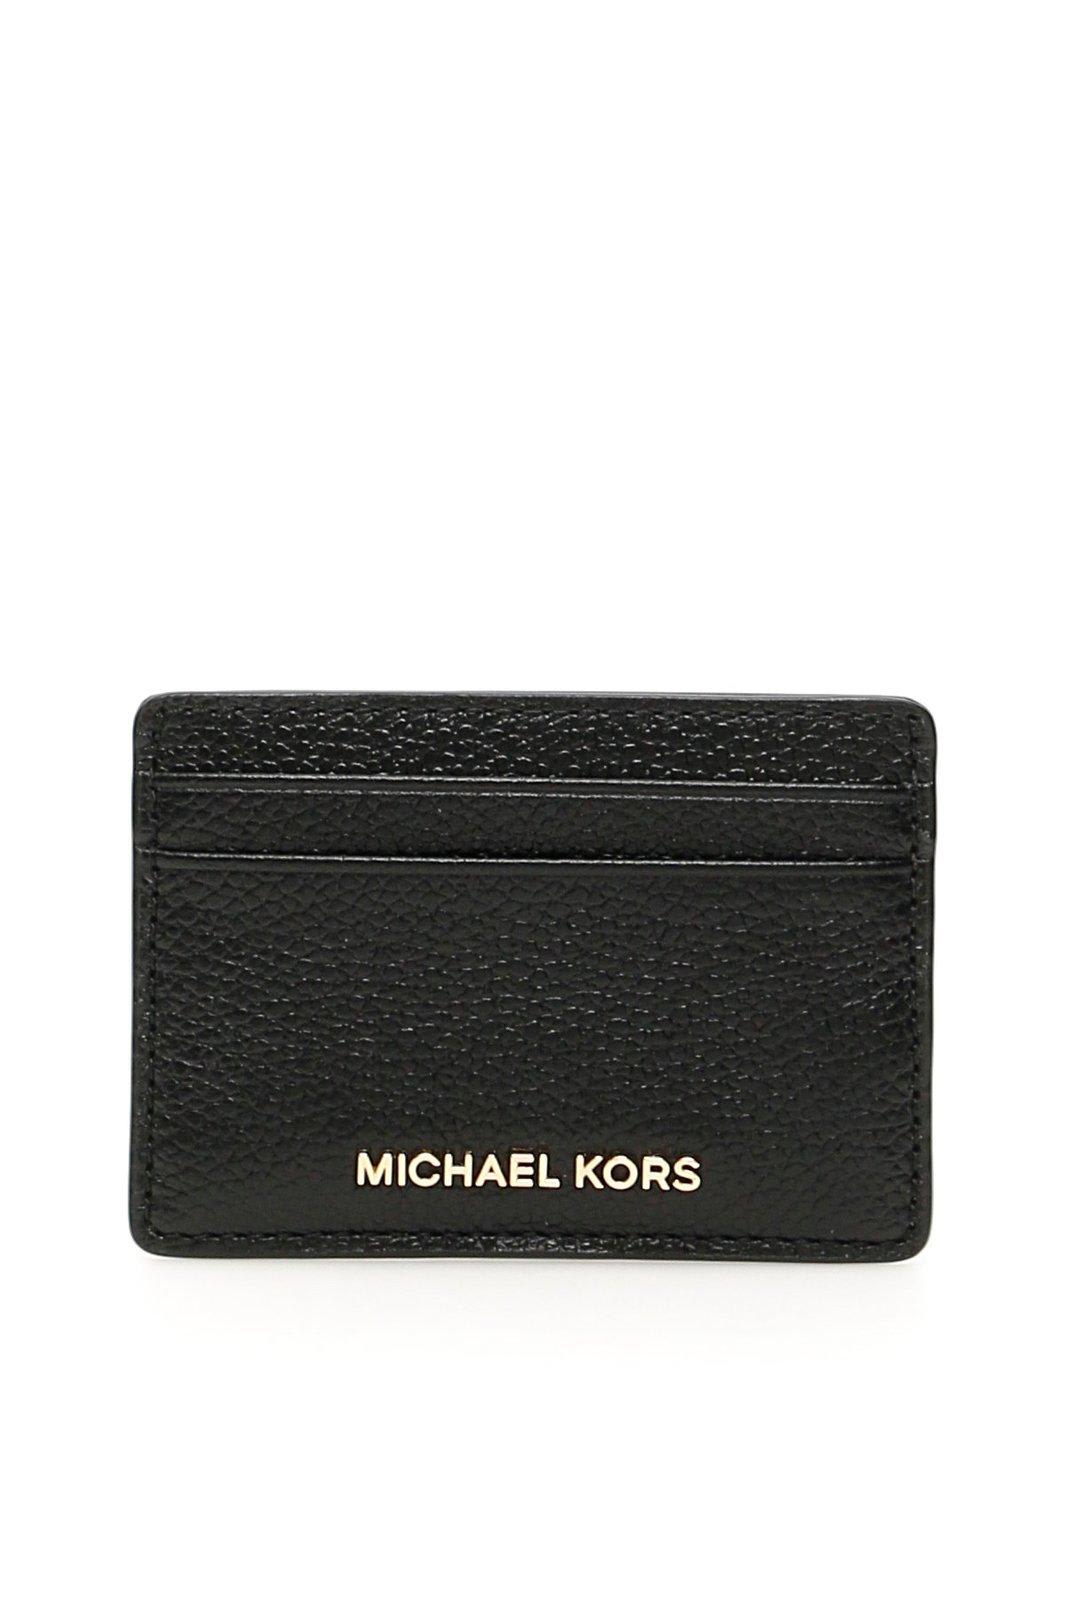 Michael Kors Jet Set Cardholder In Black